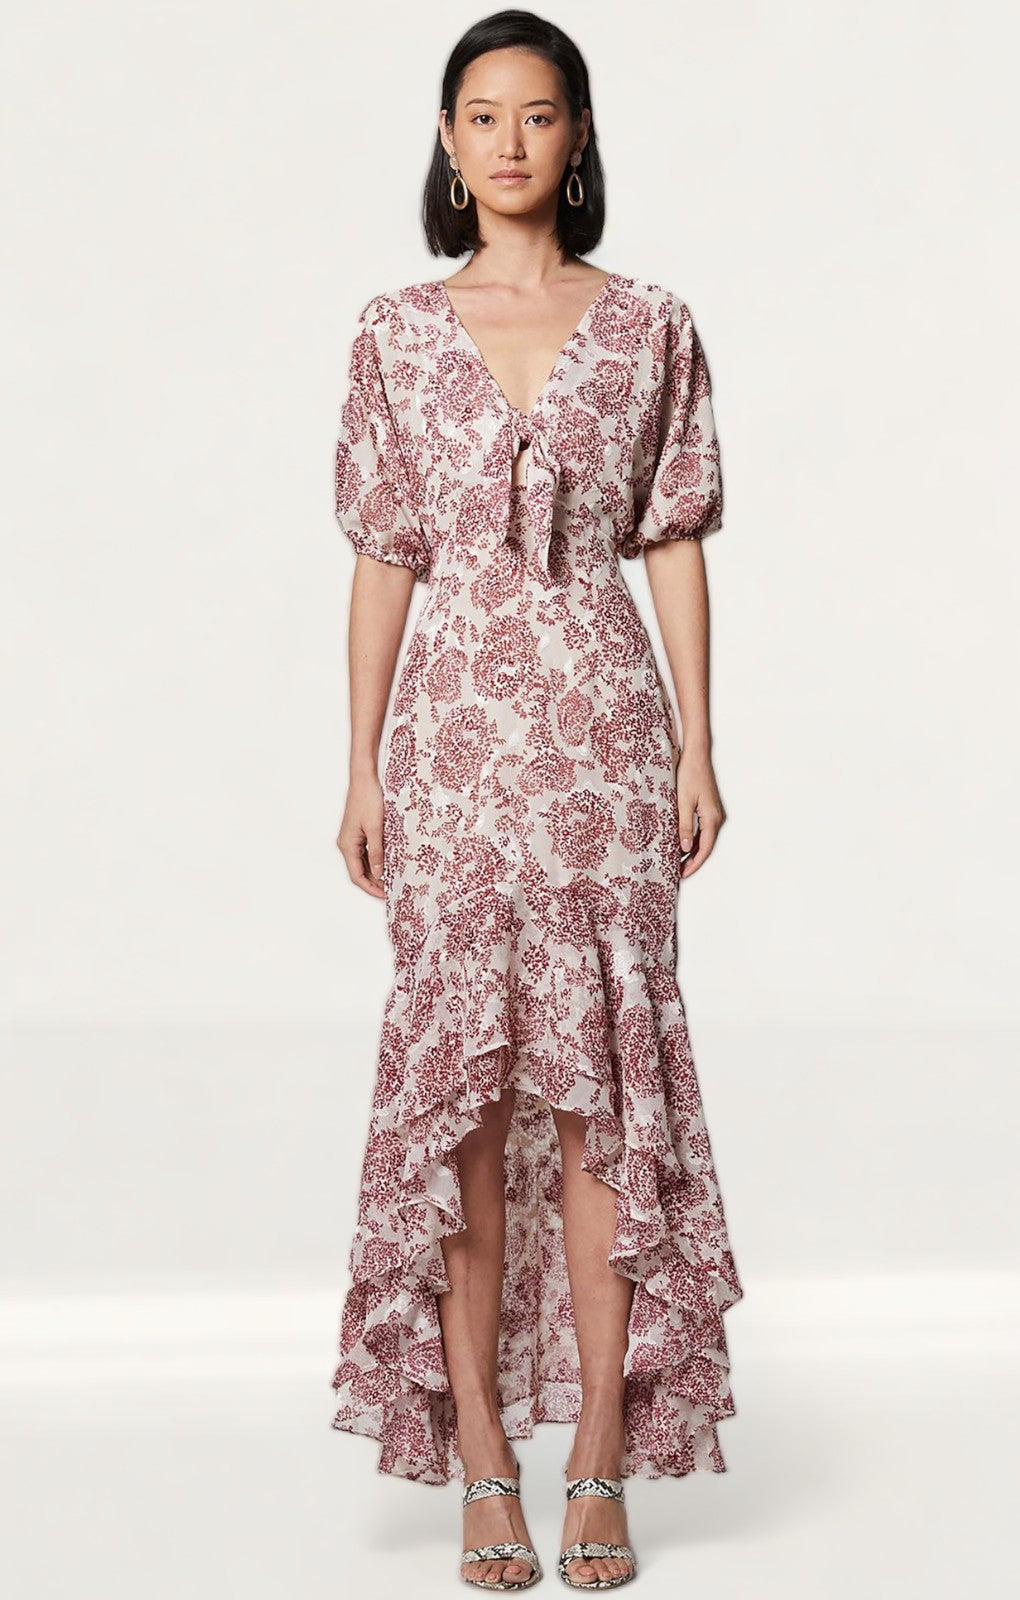 Elliatt Whiteberry Iridescent Dress product image